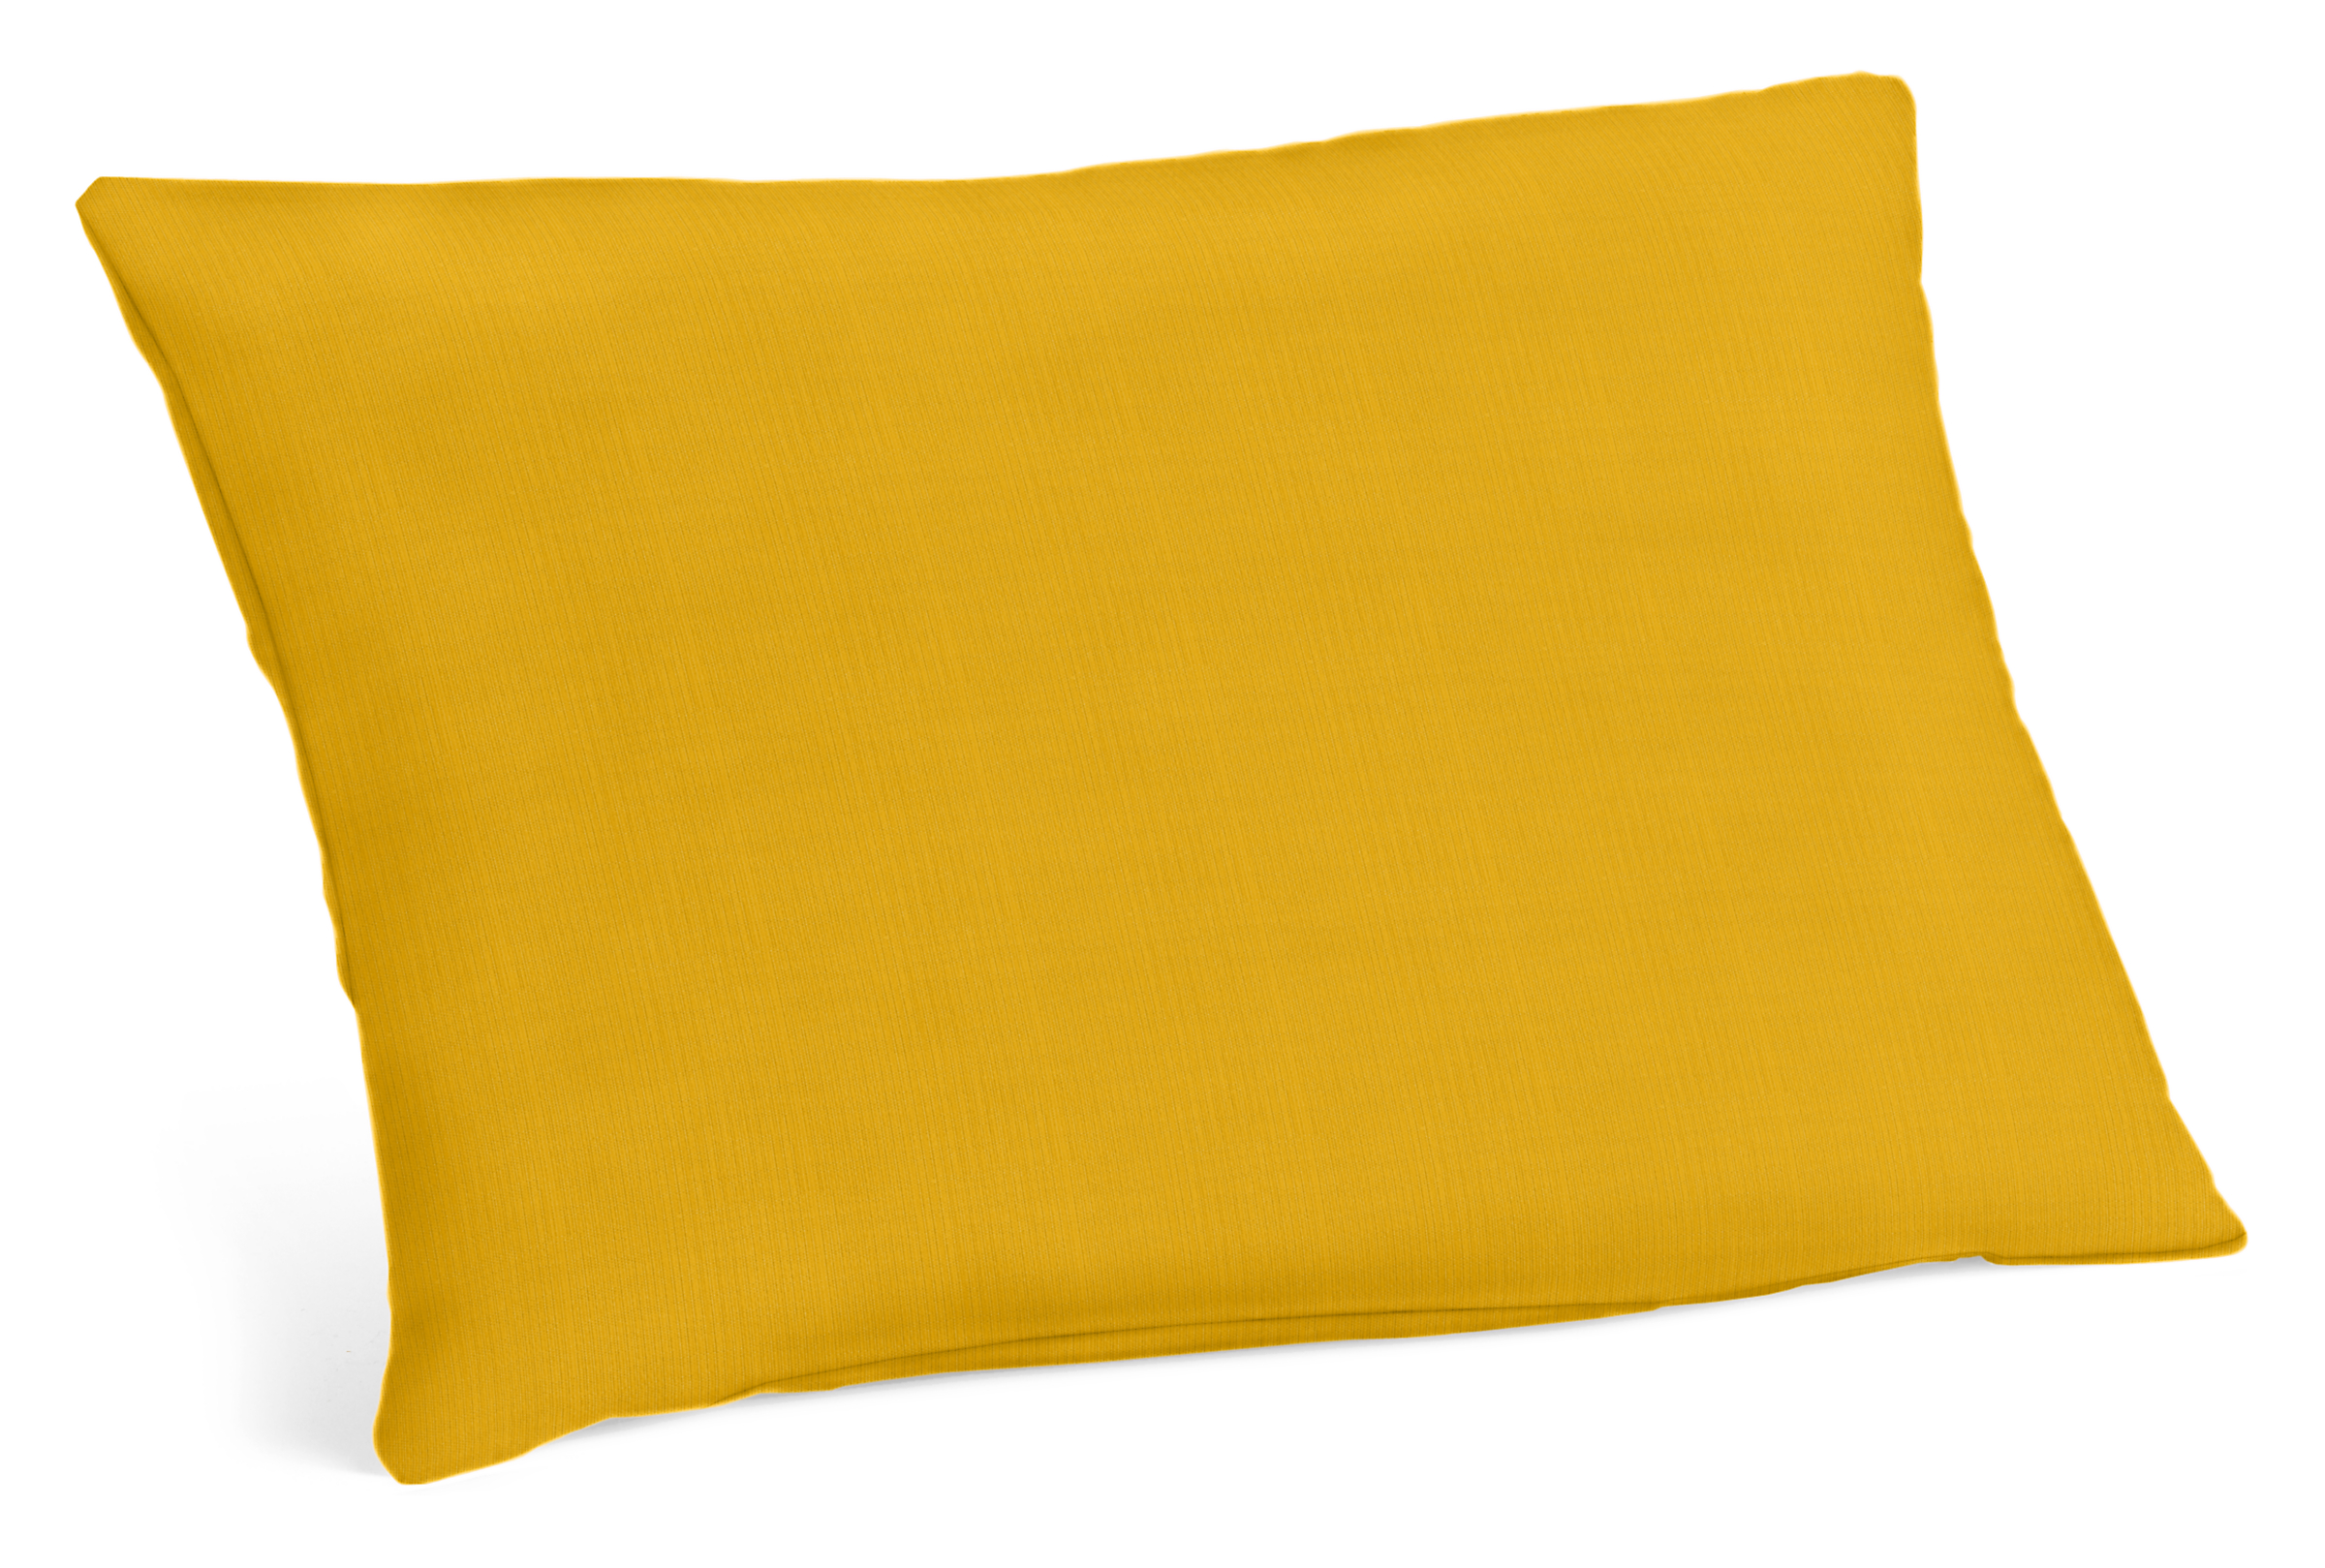 Hue 20w 13h Outdoor Pillow in Sunbrella Canvas Yellow